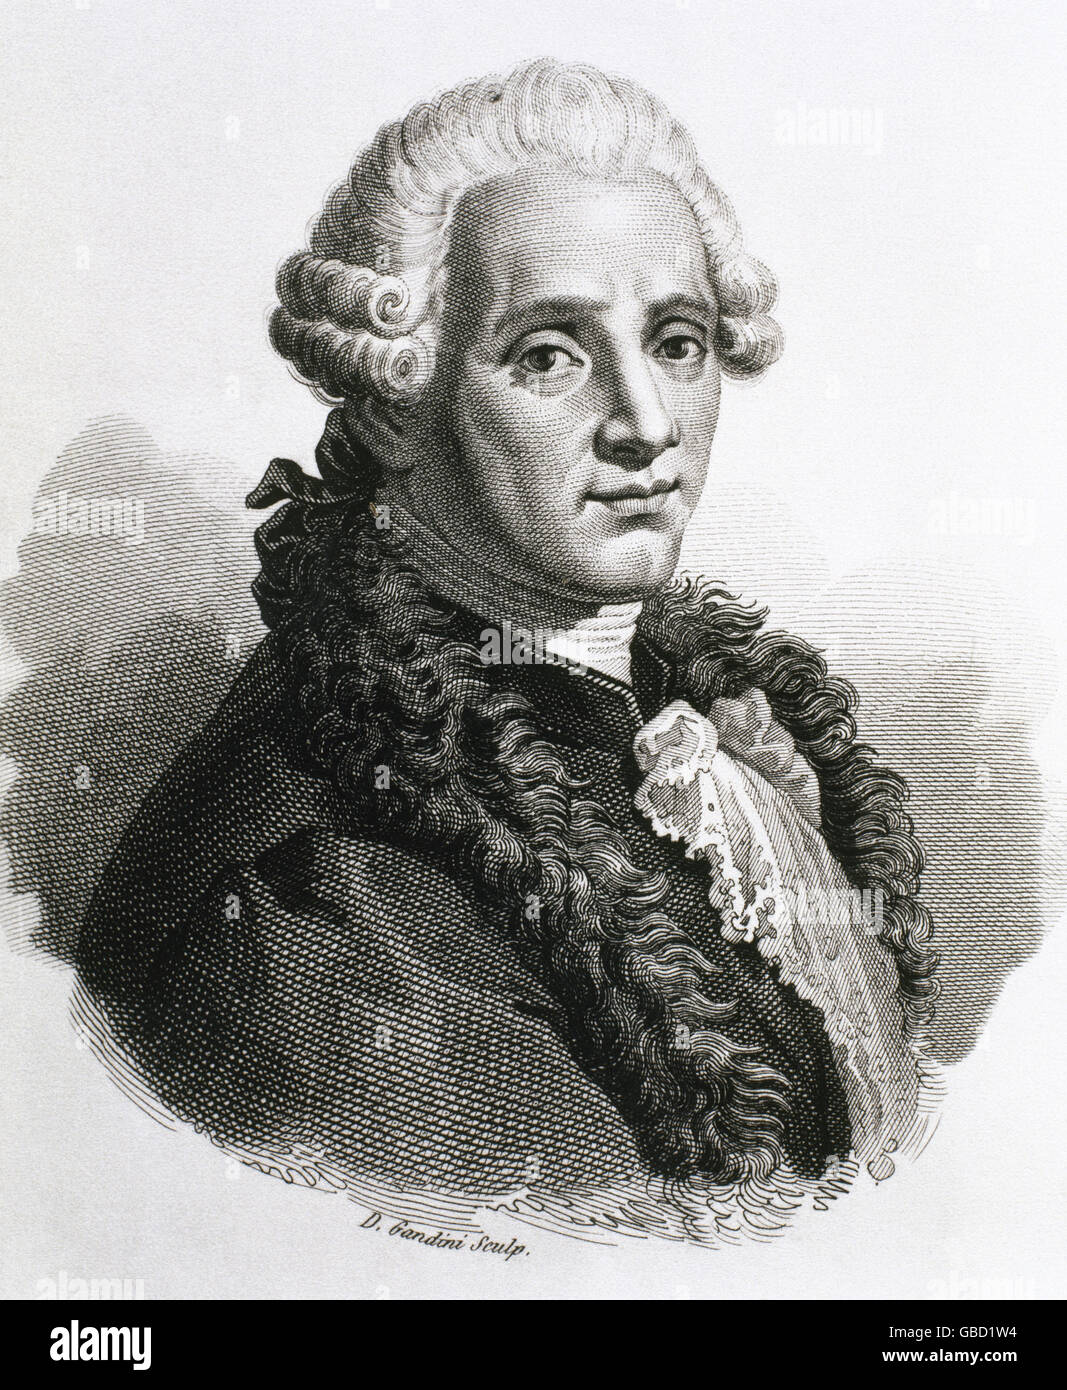 Niccolò Piccinni (1728-1800). Italienischer Komponist. Gravur. Stockfoto